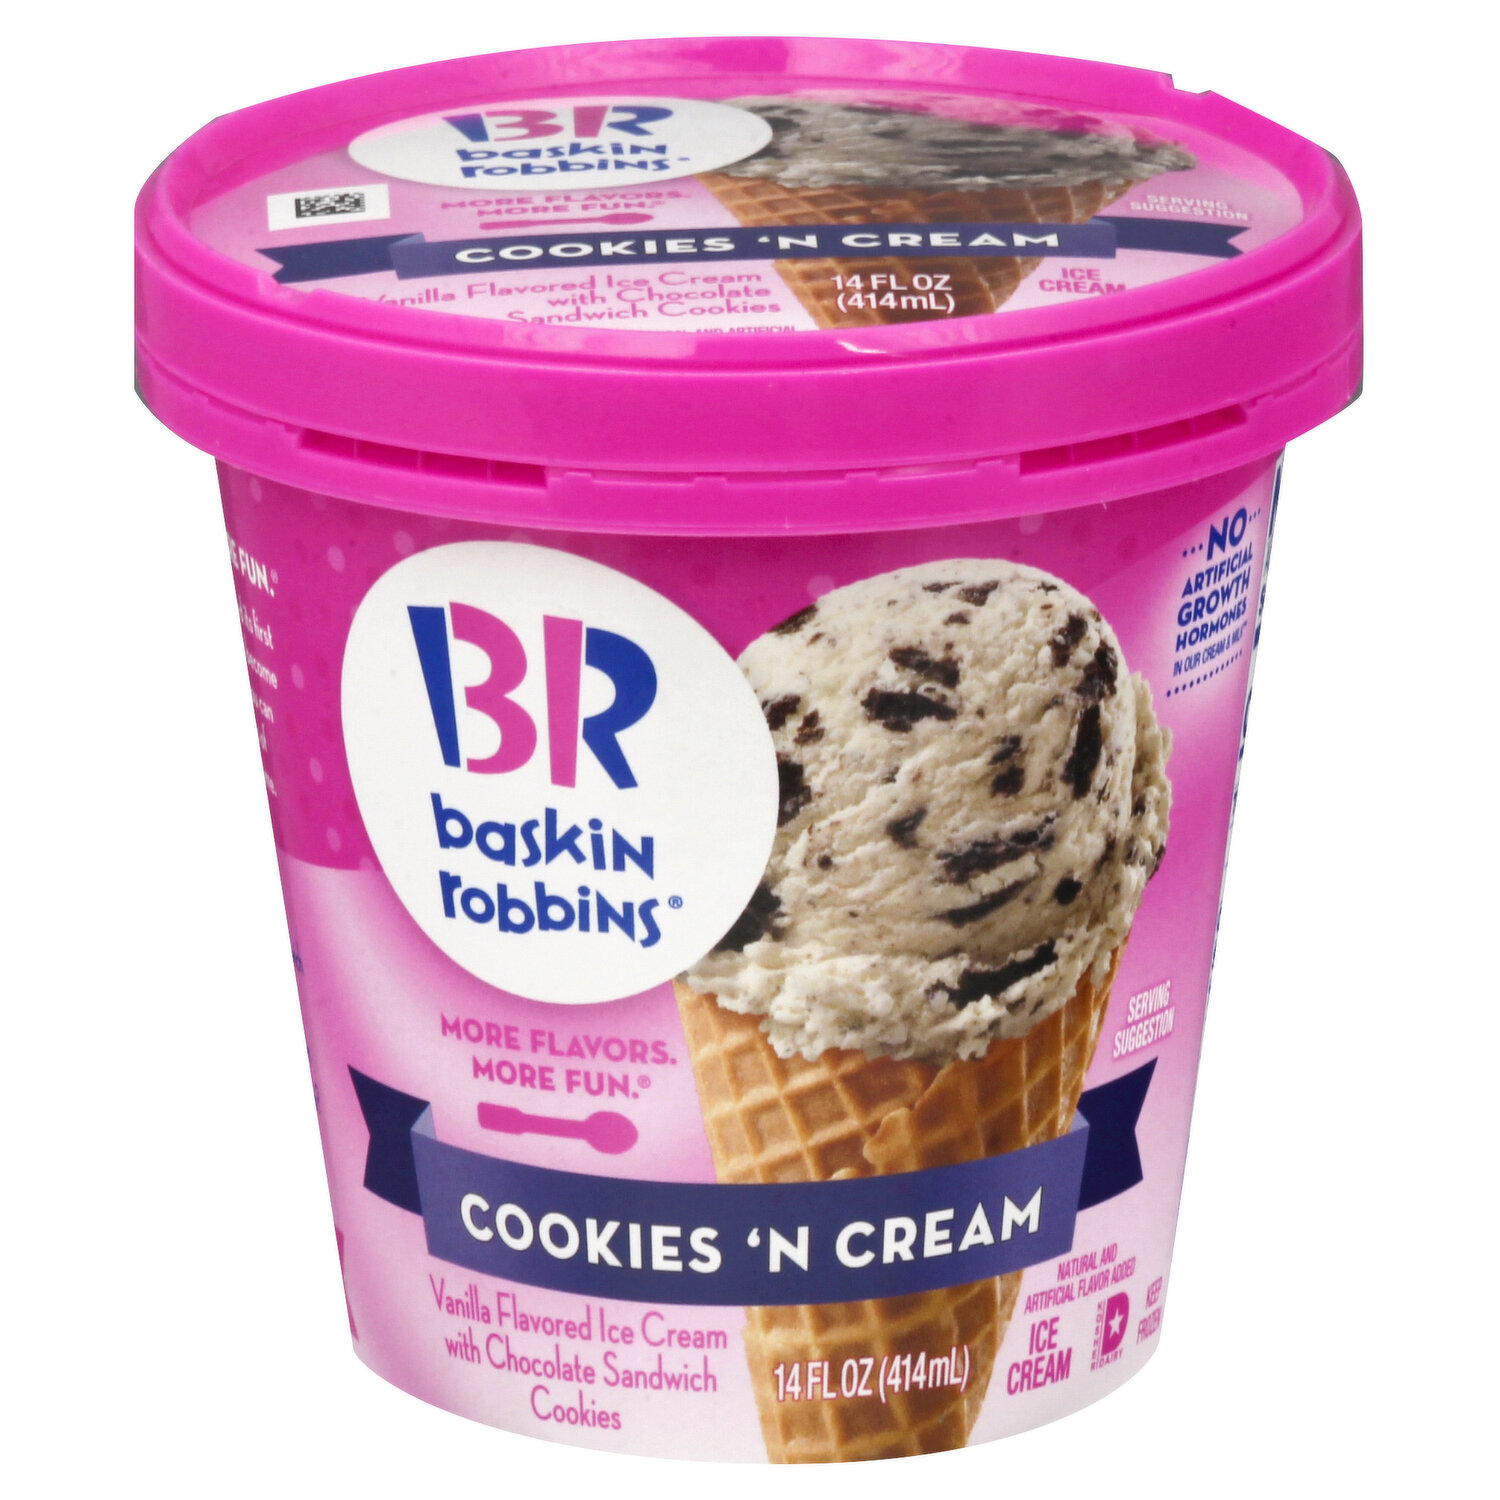 Baskin-Robbins Reveals Top Ten Ice Cream Flavors That Make People